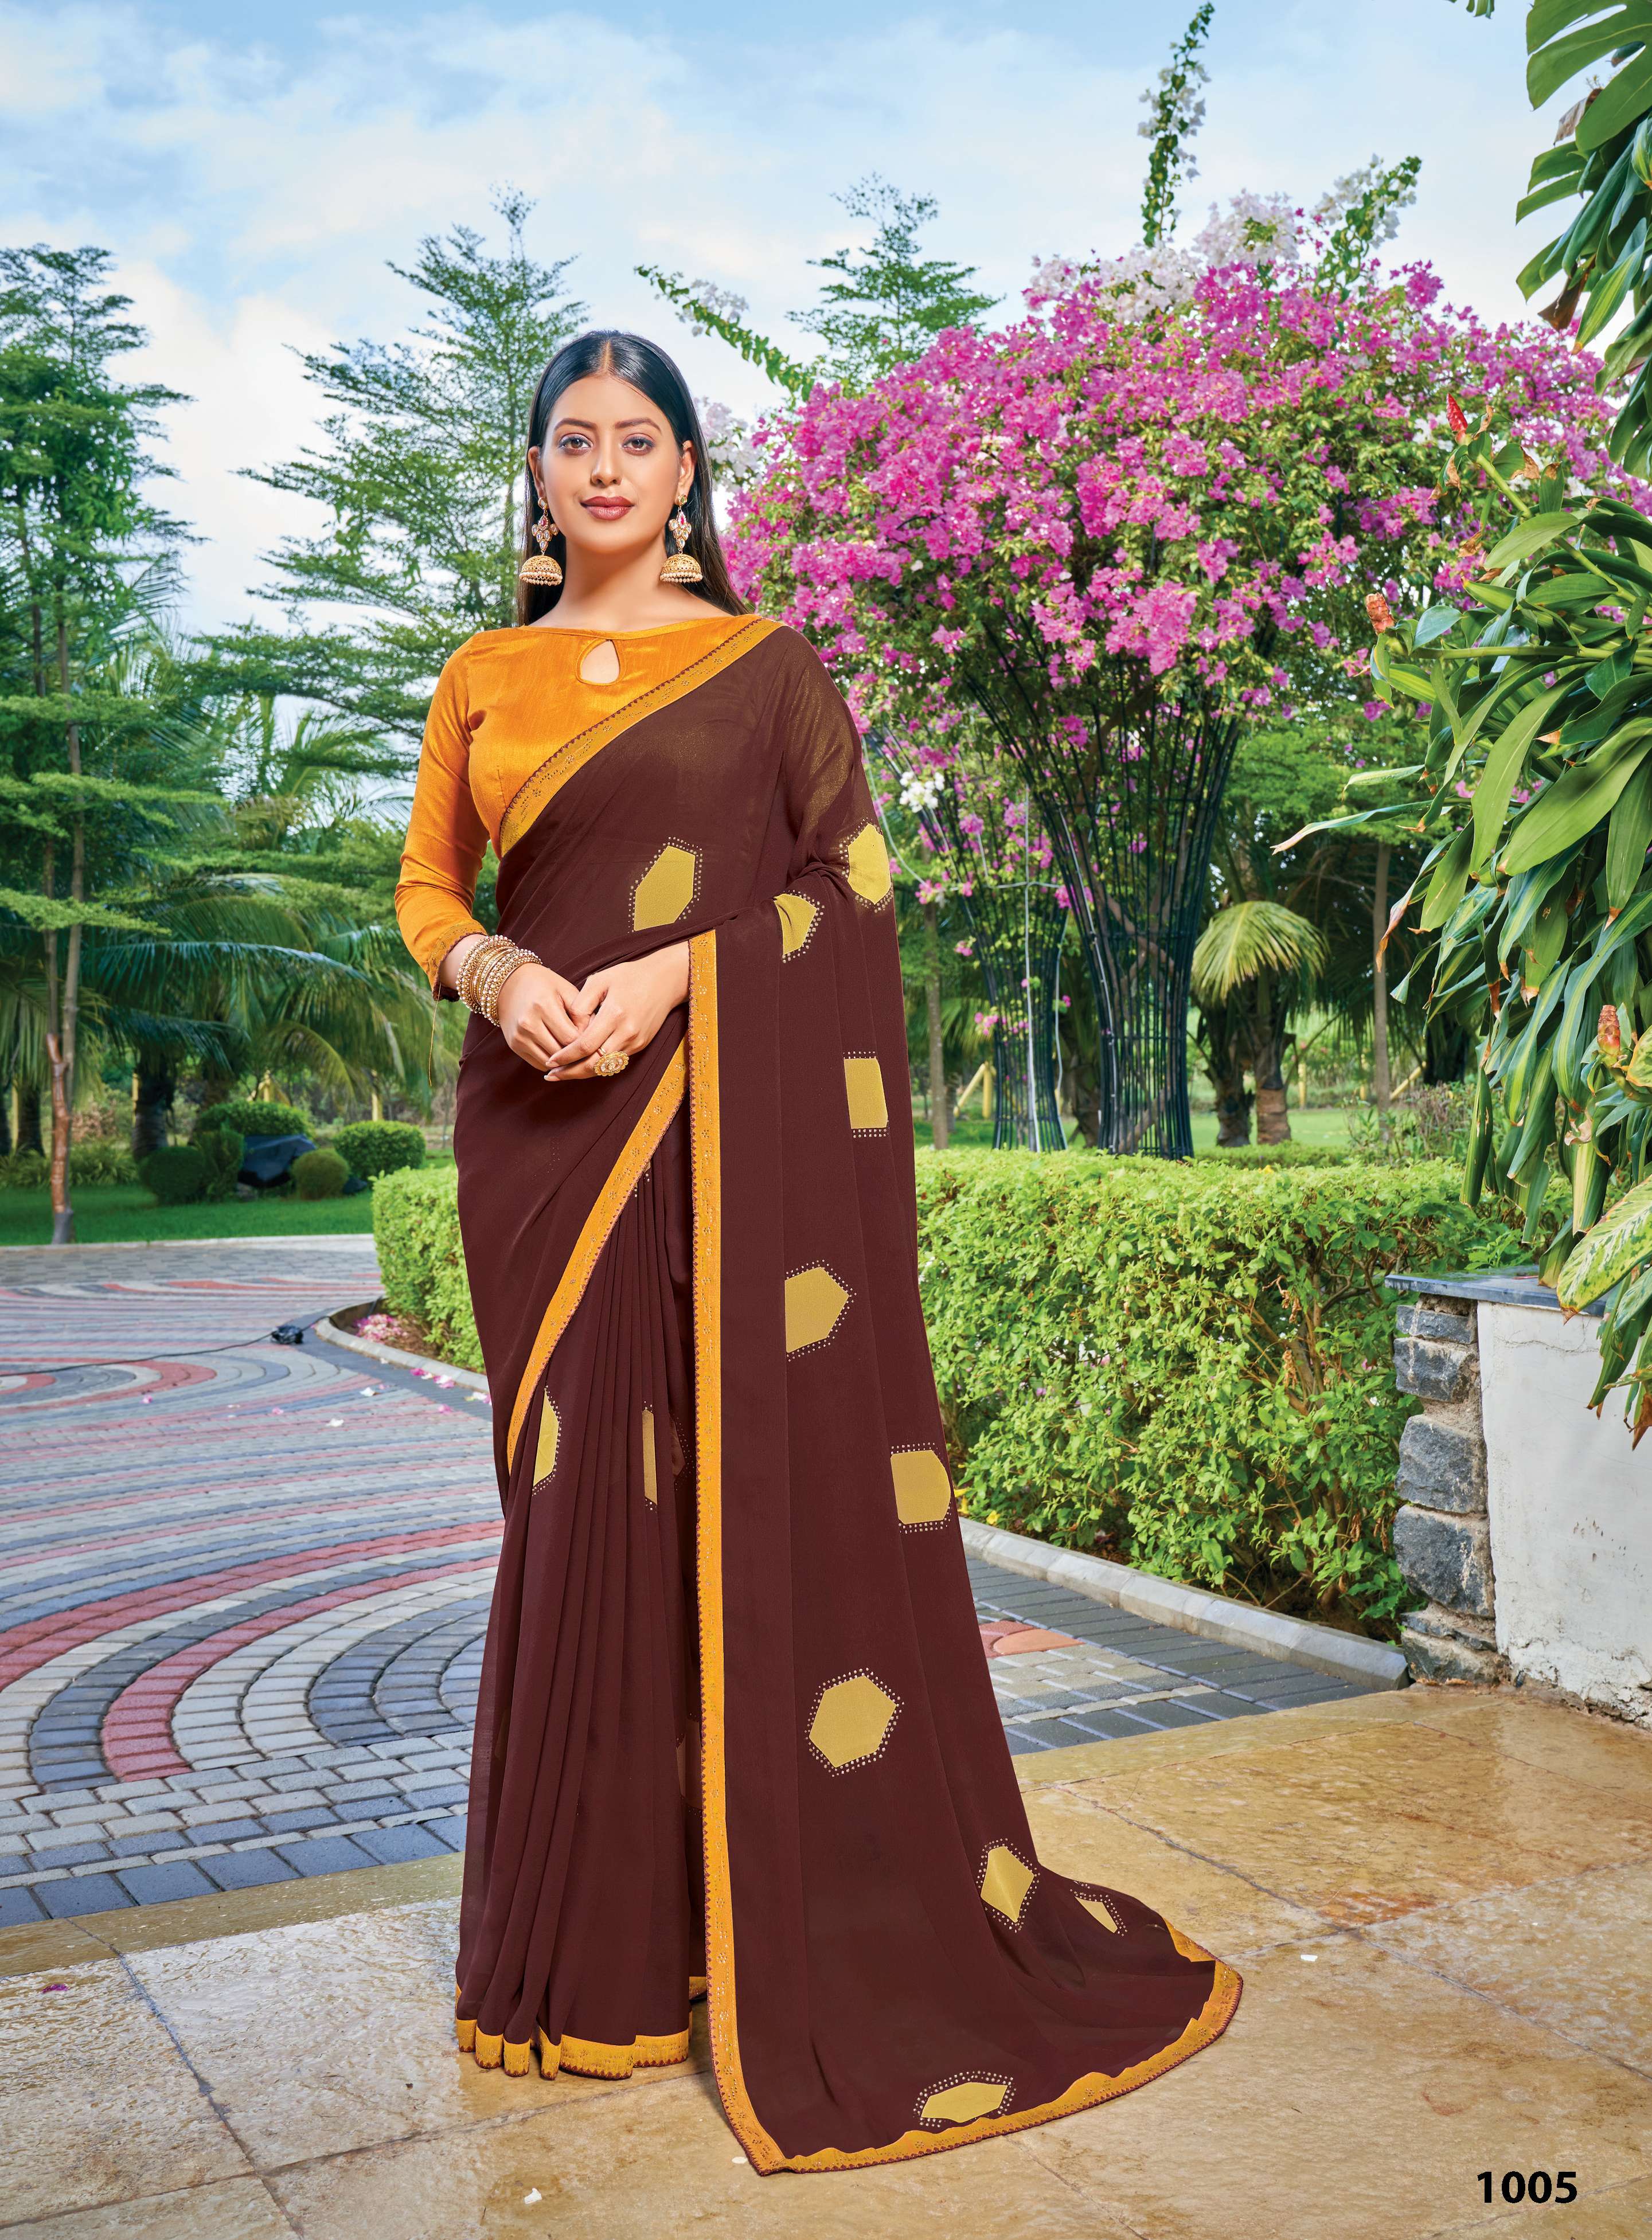 Saroj textile presents Nagme casual sarees catalogue